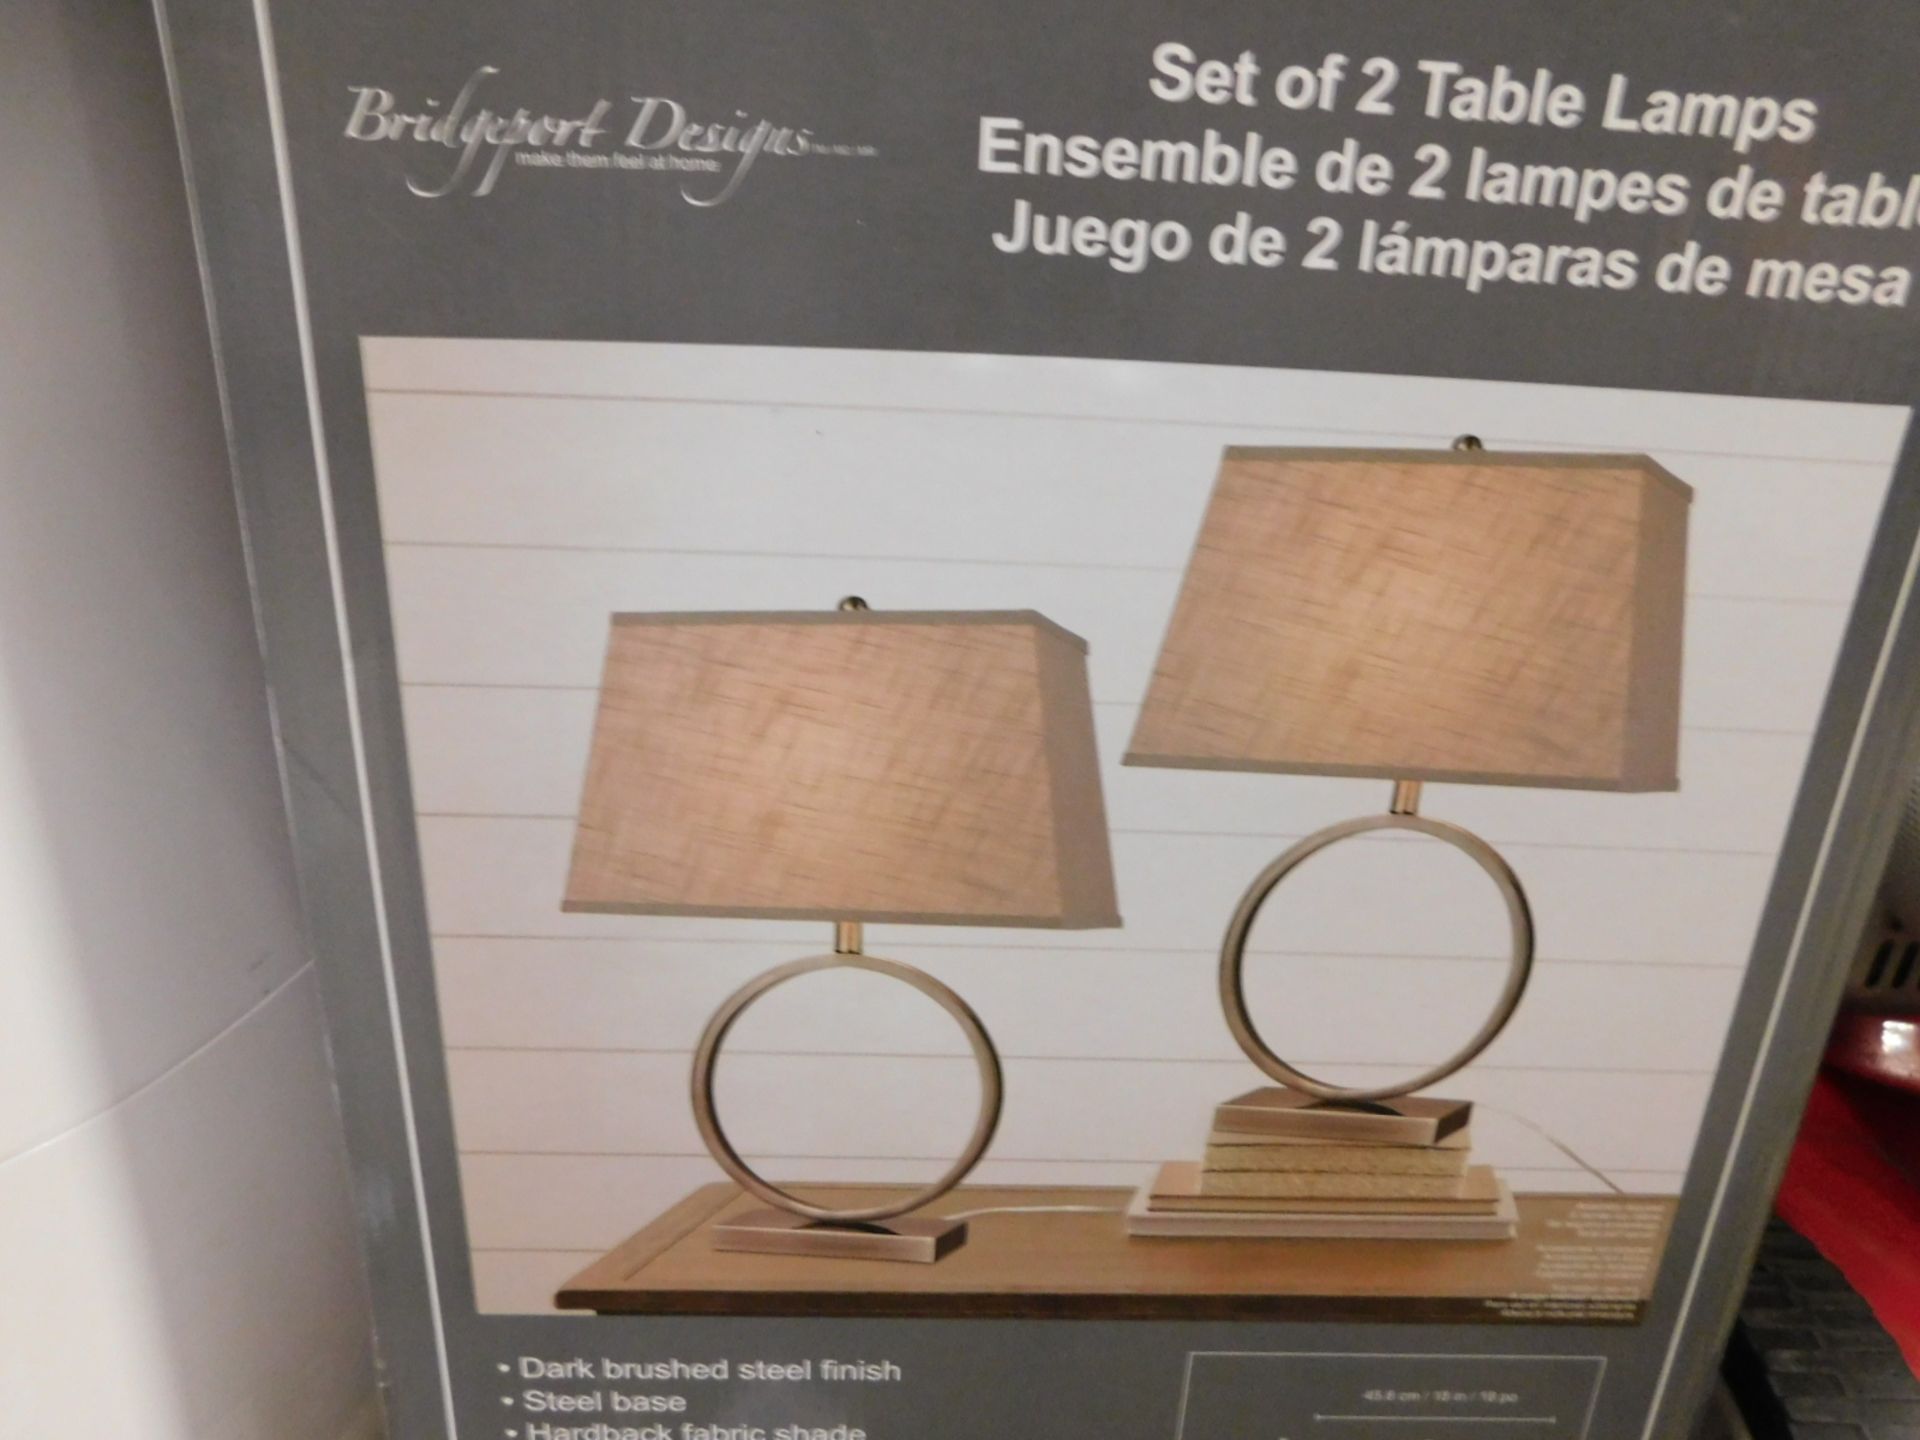 1 BOXED PAIR OF BRIDGEPORT DESIGNS BRUSHED STEEL HALO TABLE LAMPS RRP Â£119.99